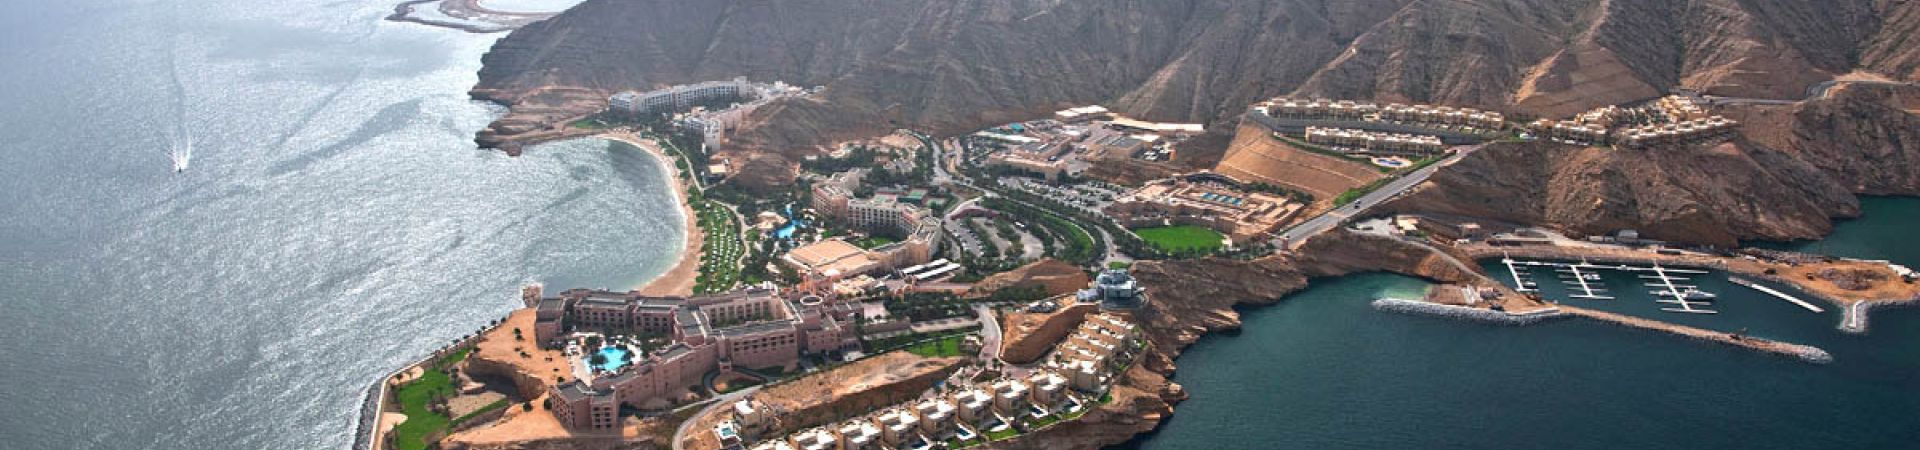 Shangri-La Barr Al Jissah Resort And Spa - Al Waha, Muscat oman